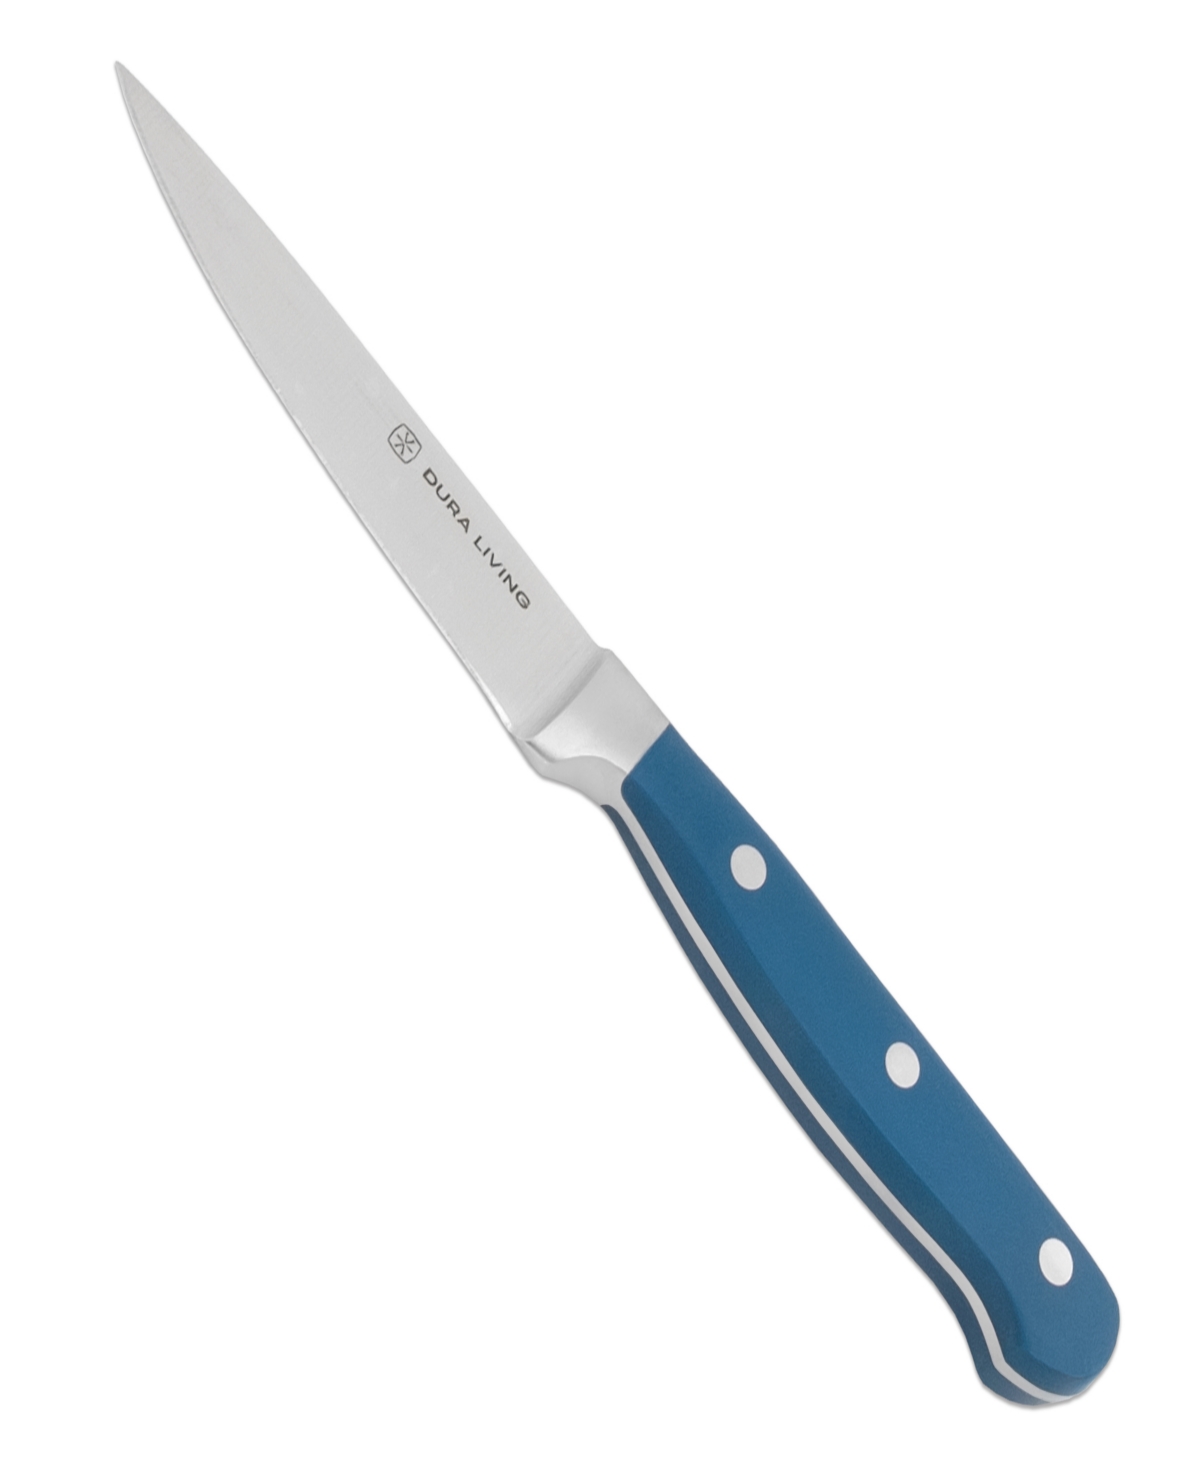 Duraliving 3.5" Kitchen Paring Knife In Royal Blue